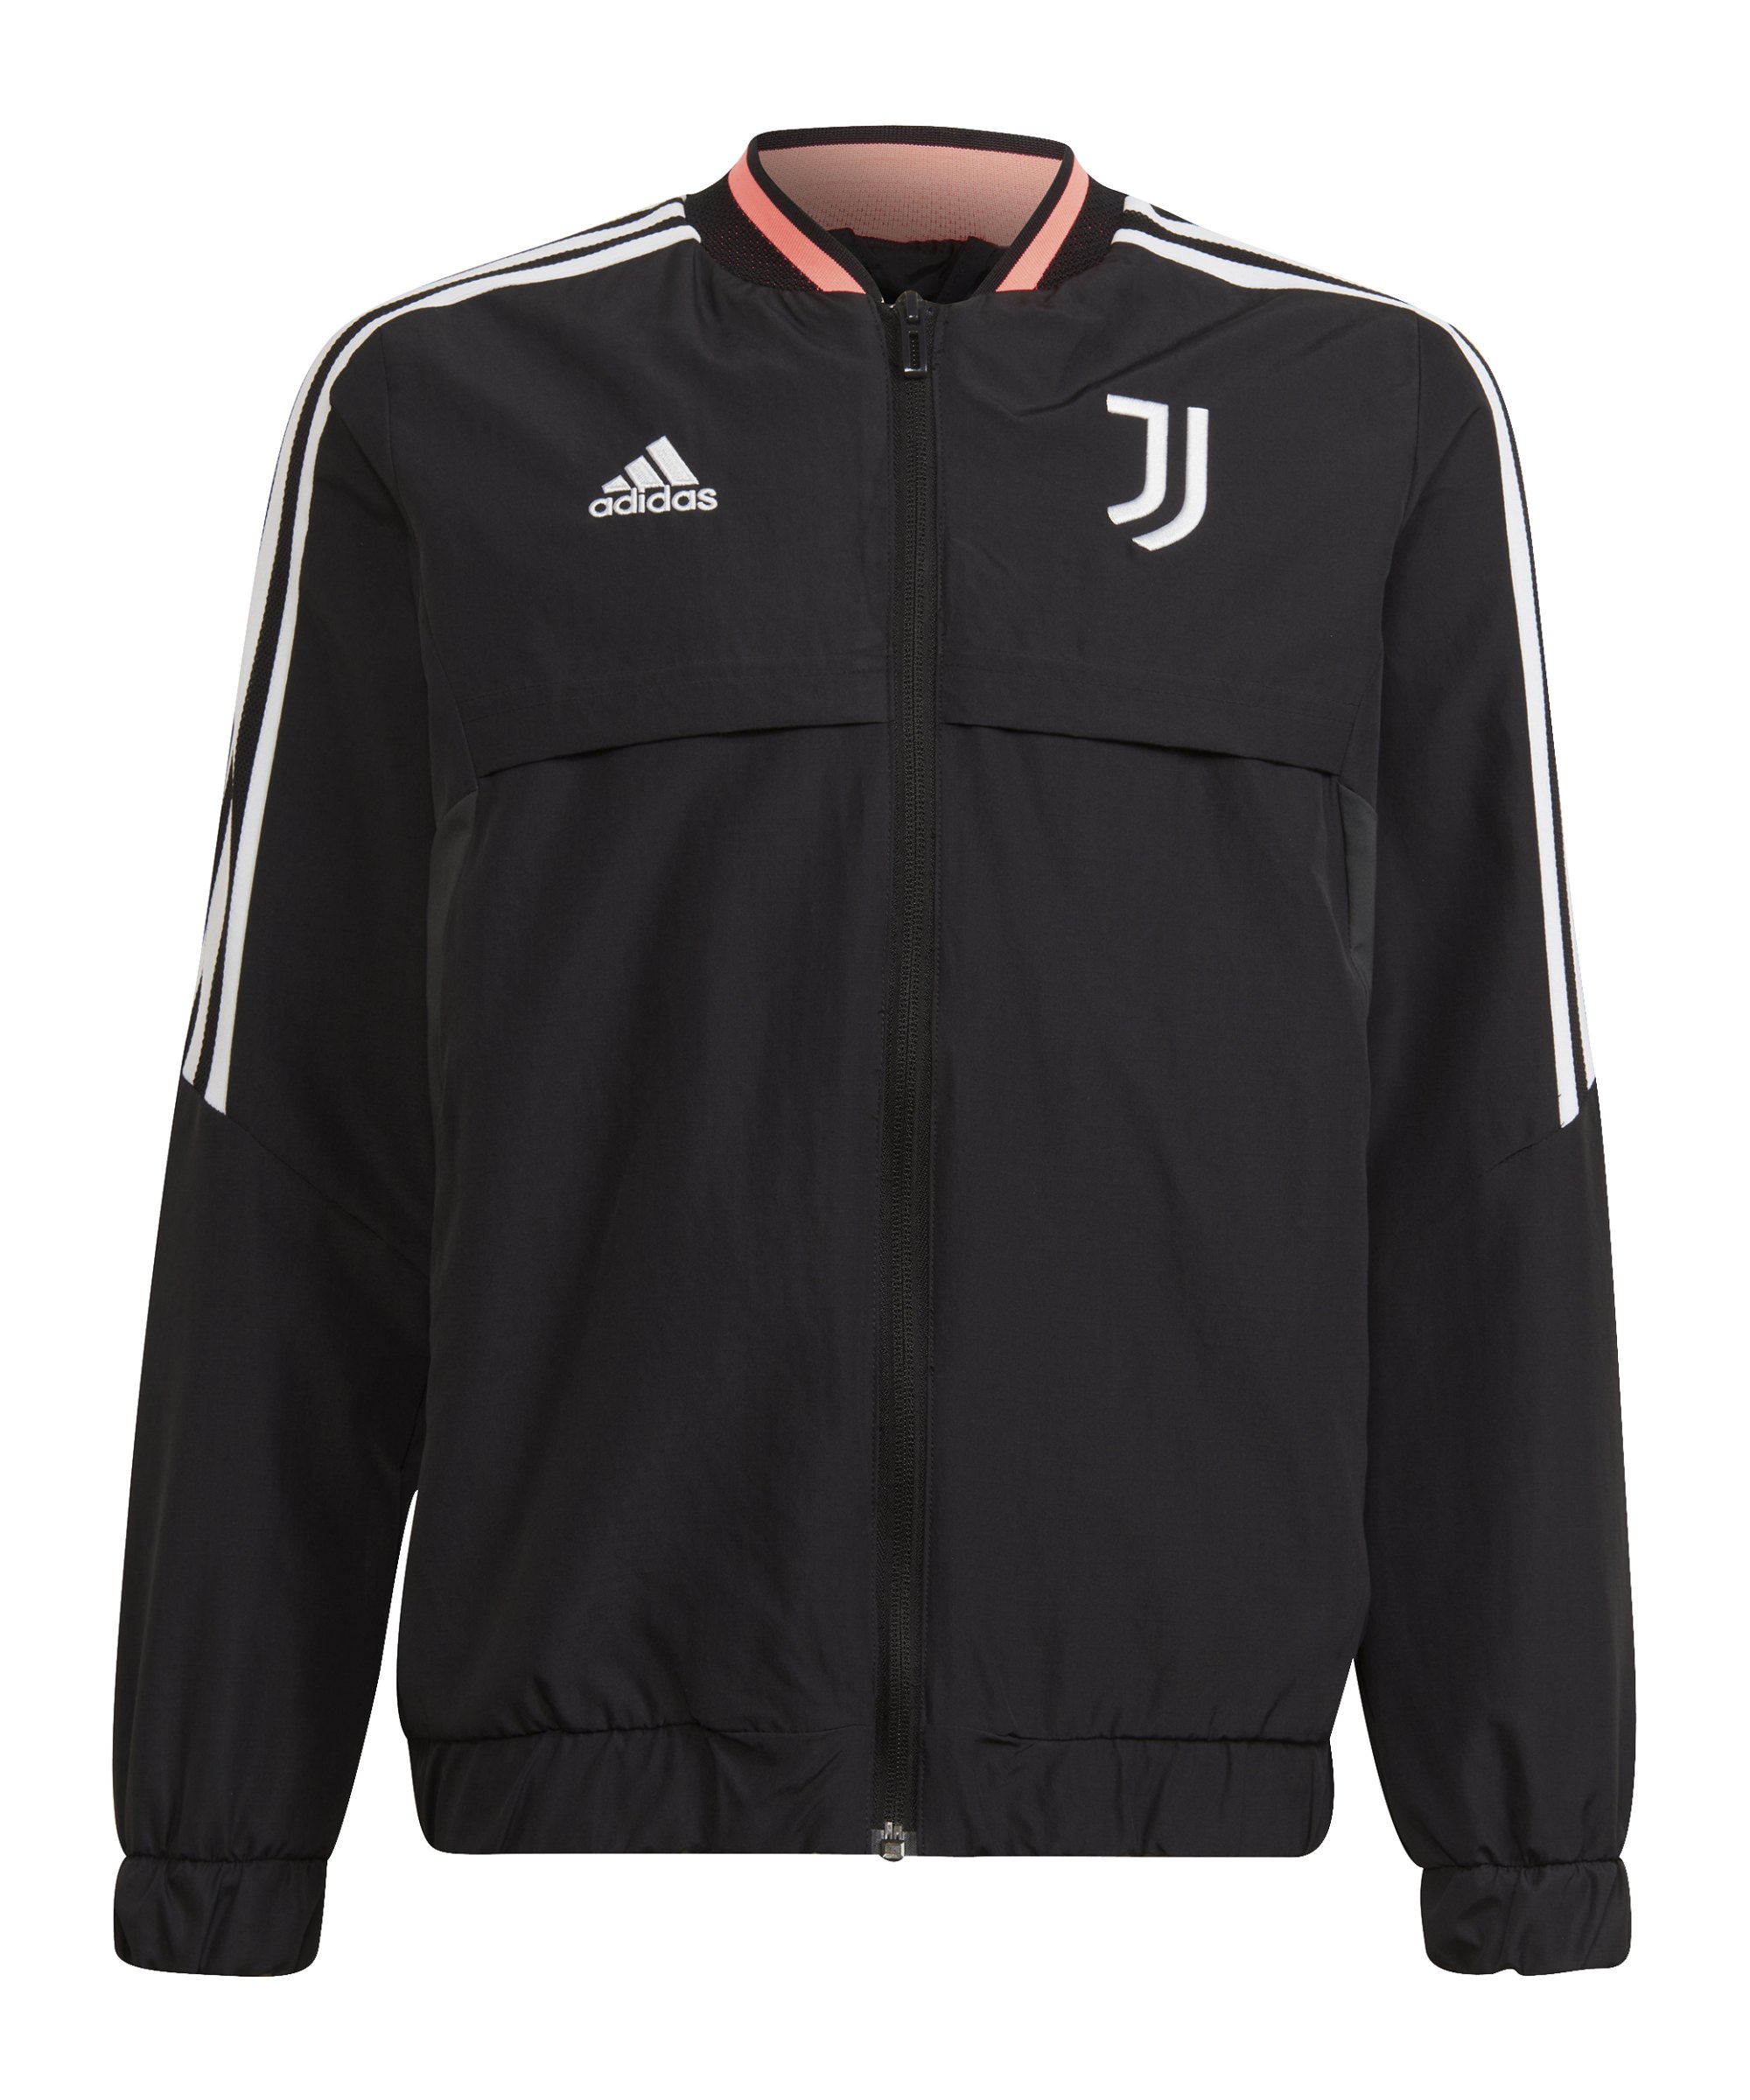 adidas Juventus Turin Jacke Kids Schwarz - schwarz